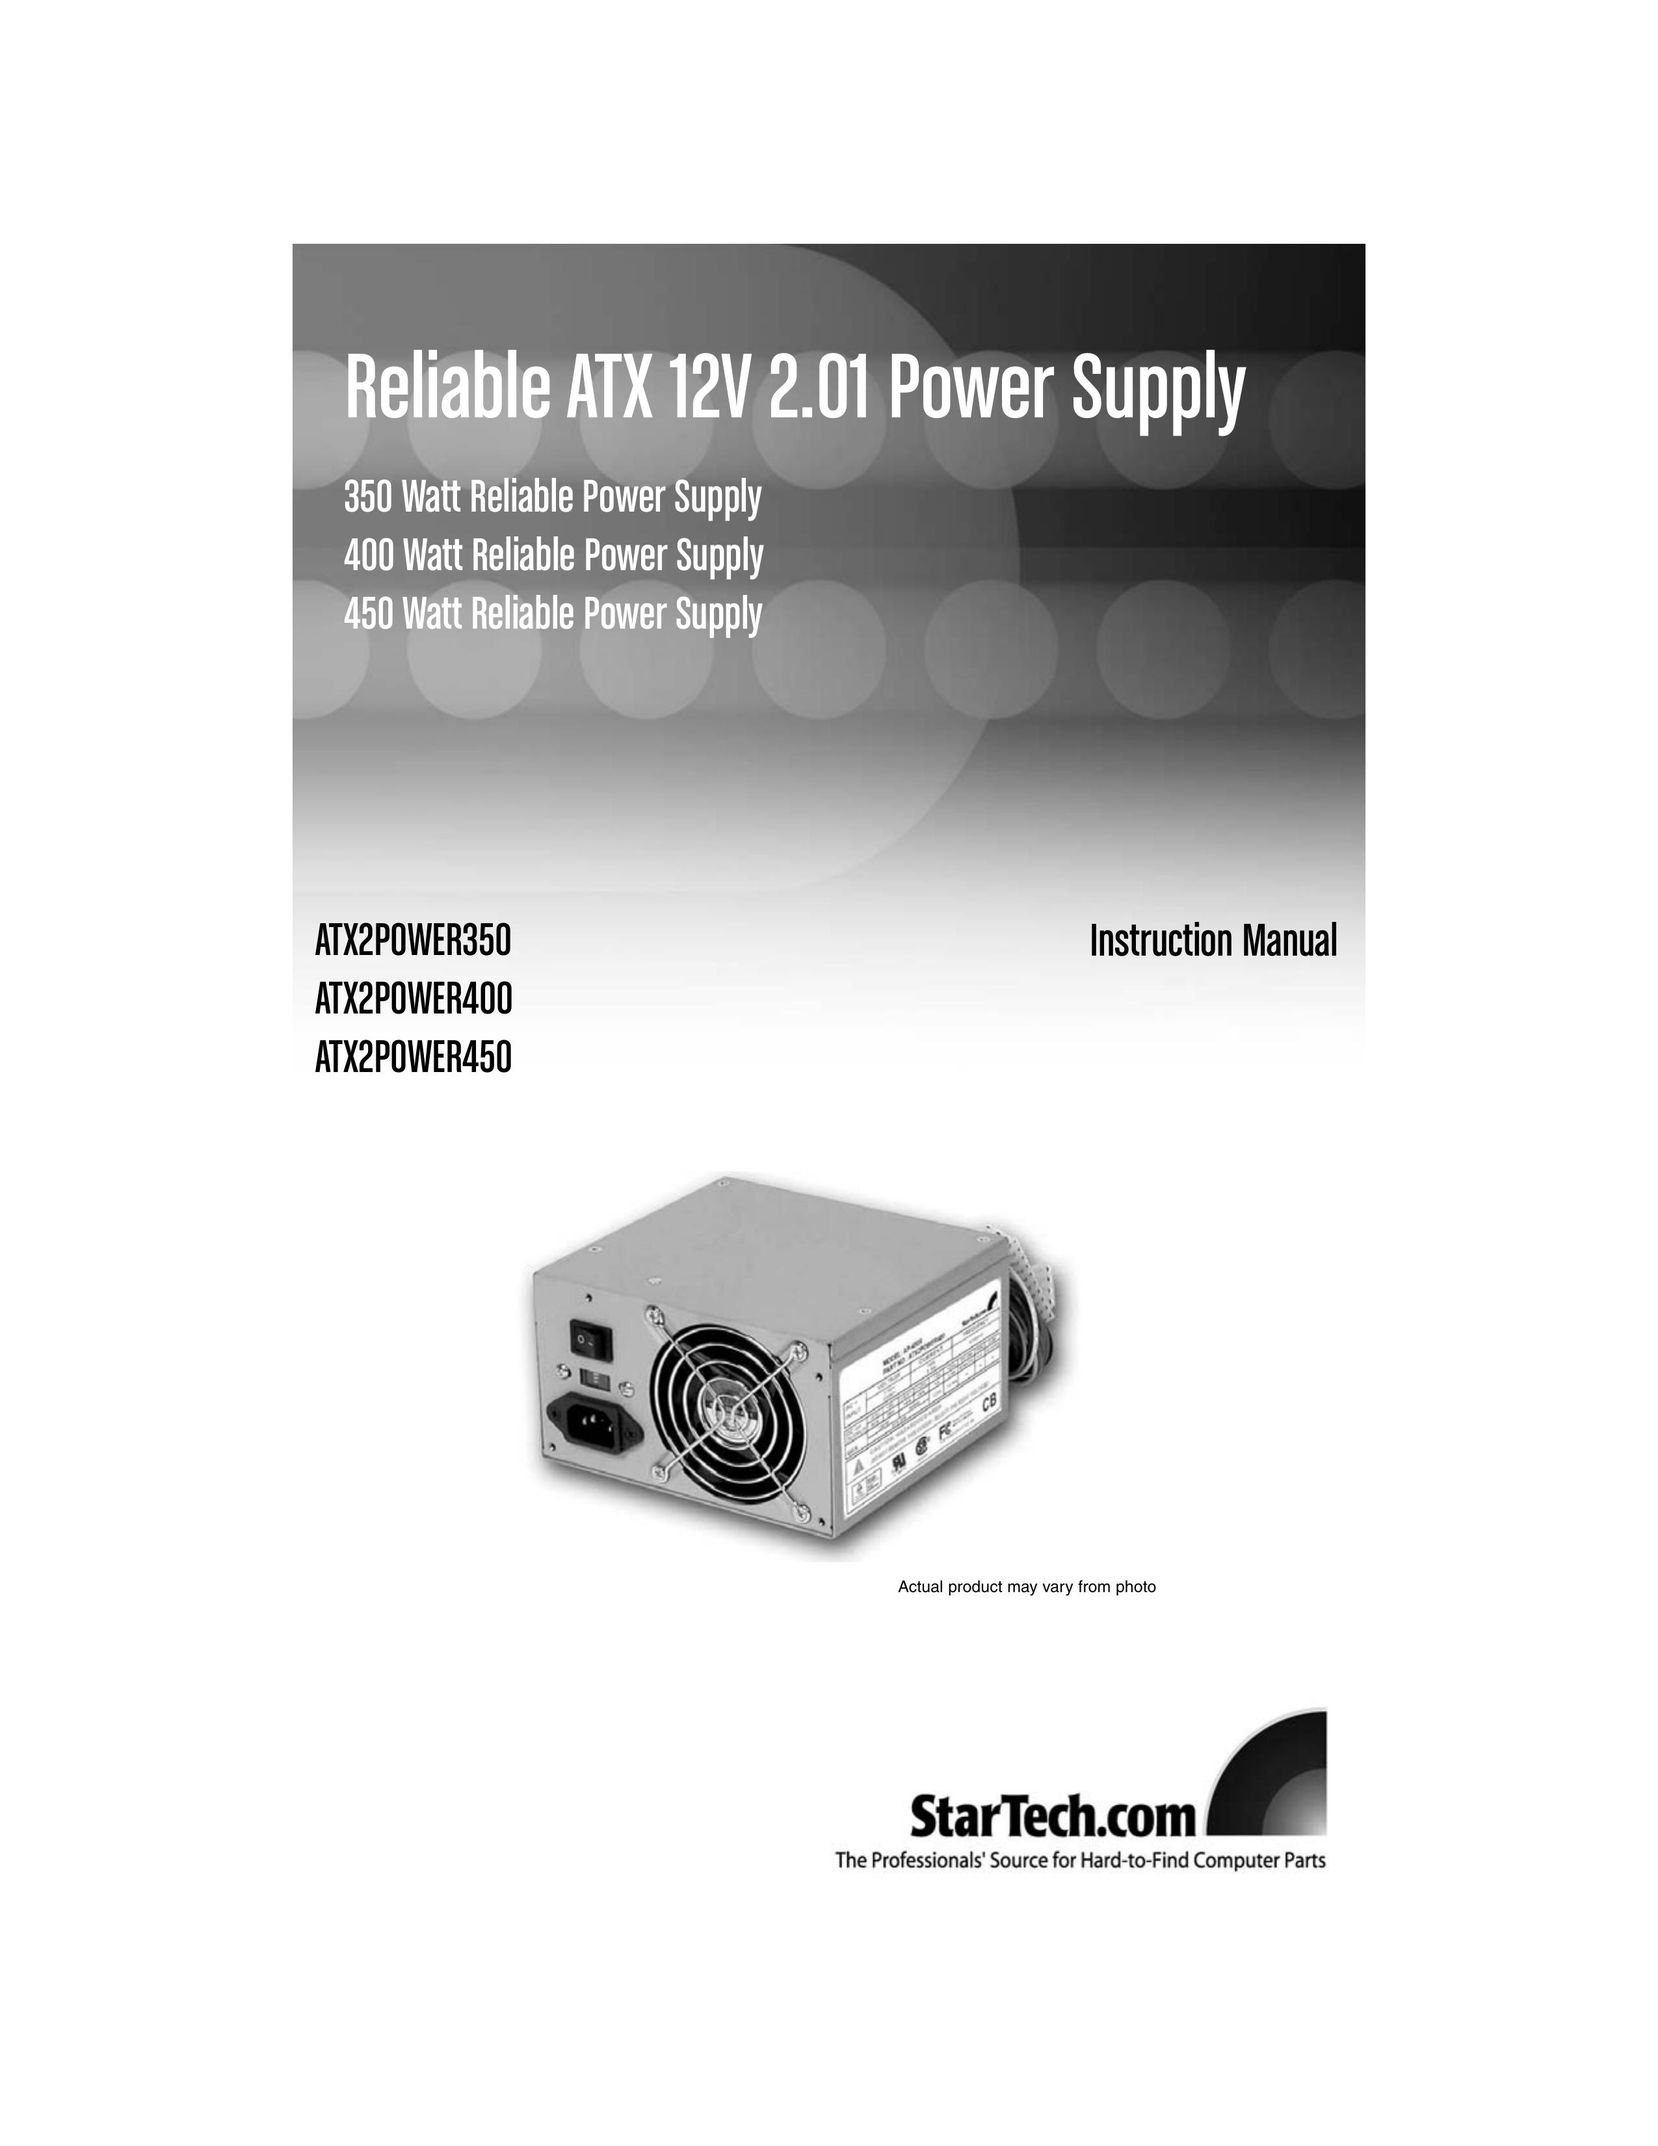 StarTech.com ATX2POWER350 Power Supply User Manual